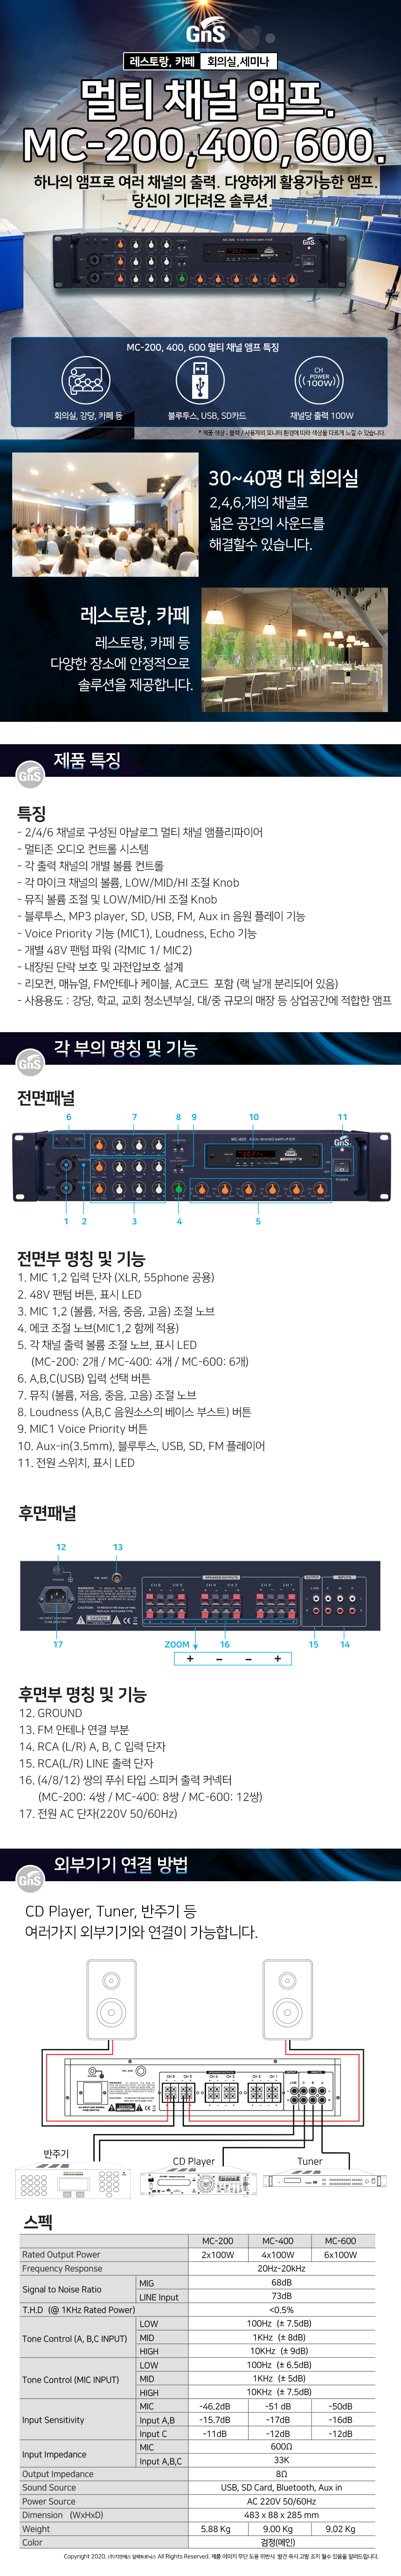 mc-series-GNS-electronics-co-ltd.jpg